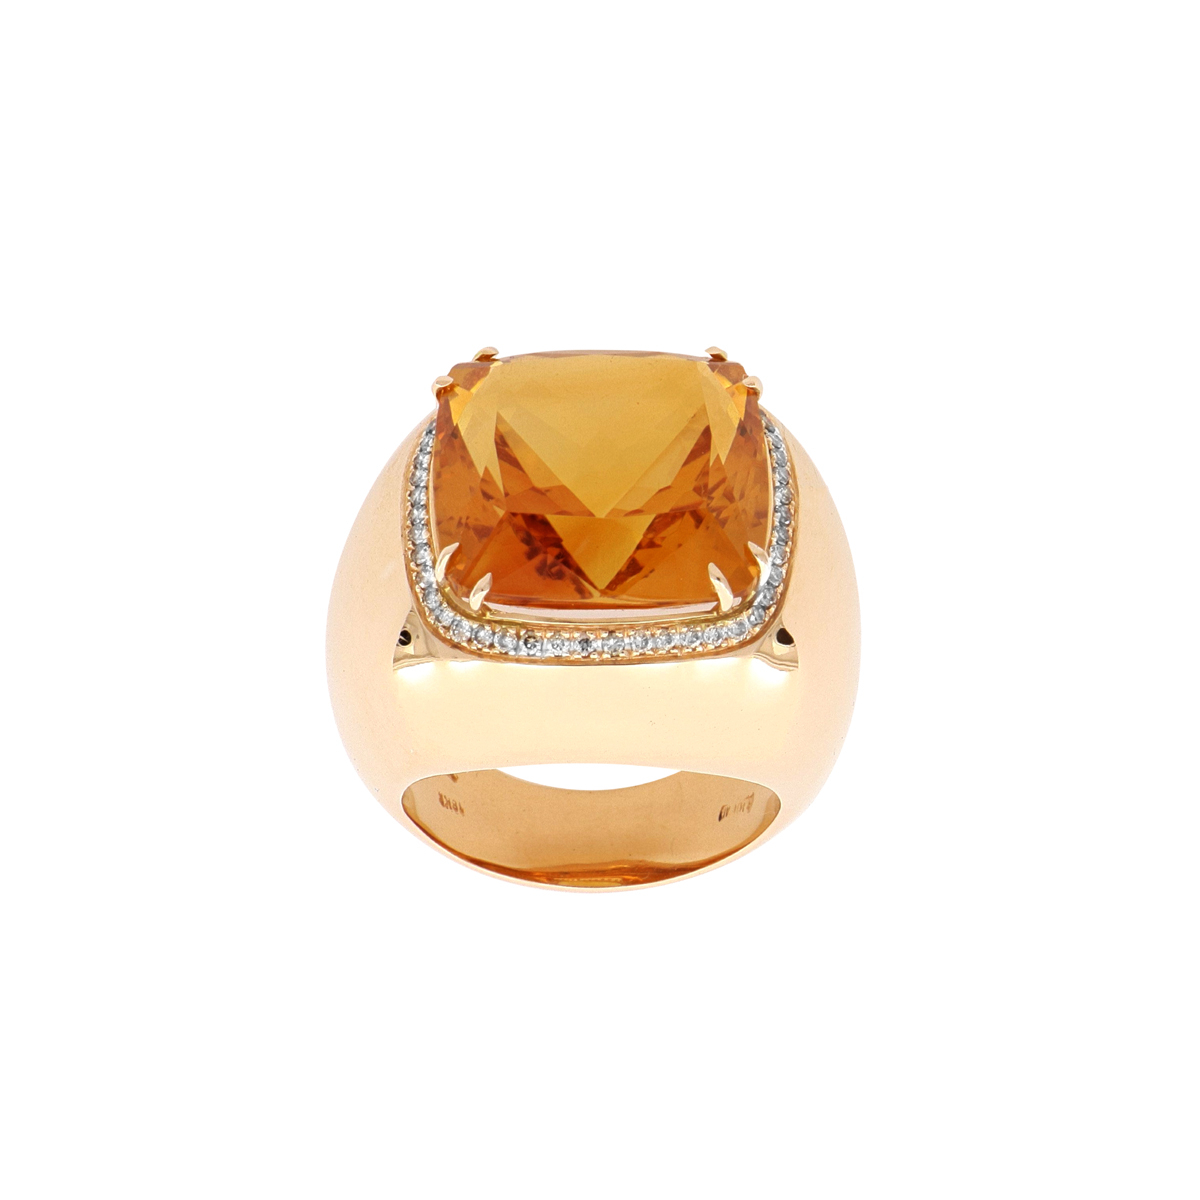 Beautiful orange spinel and white diamonds ring